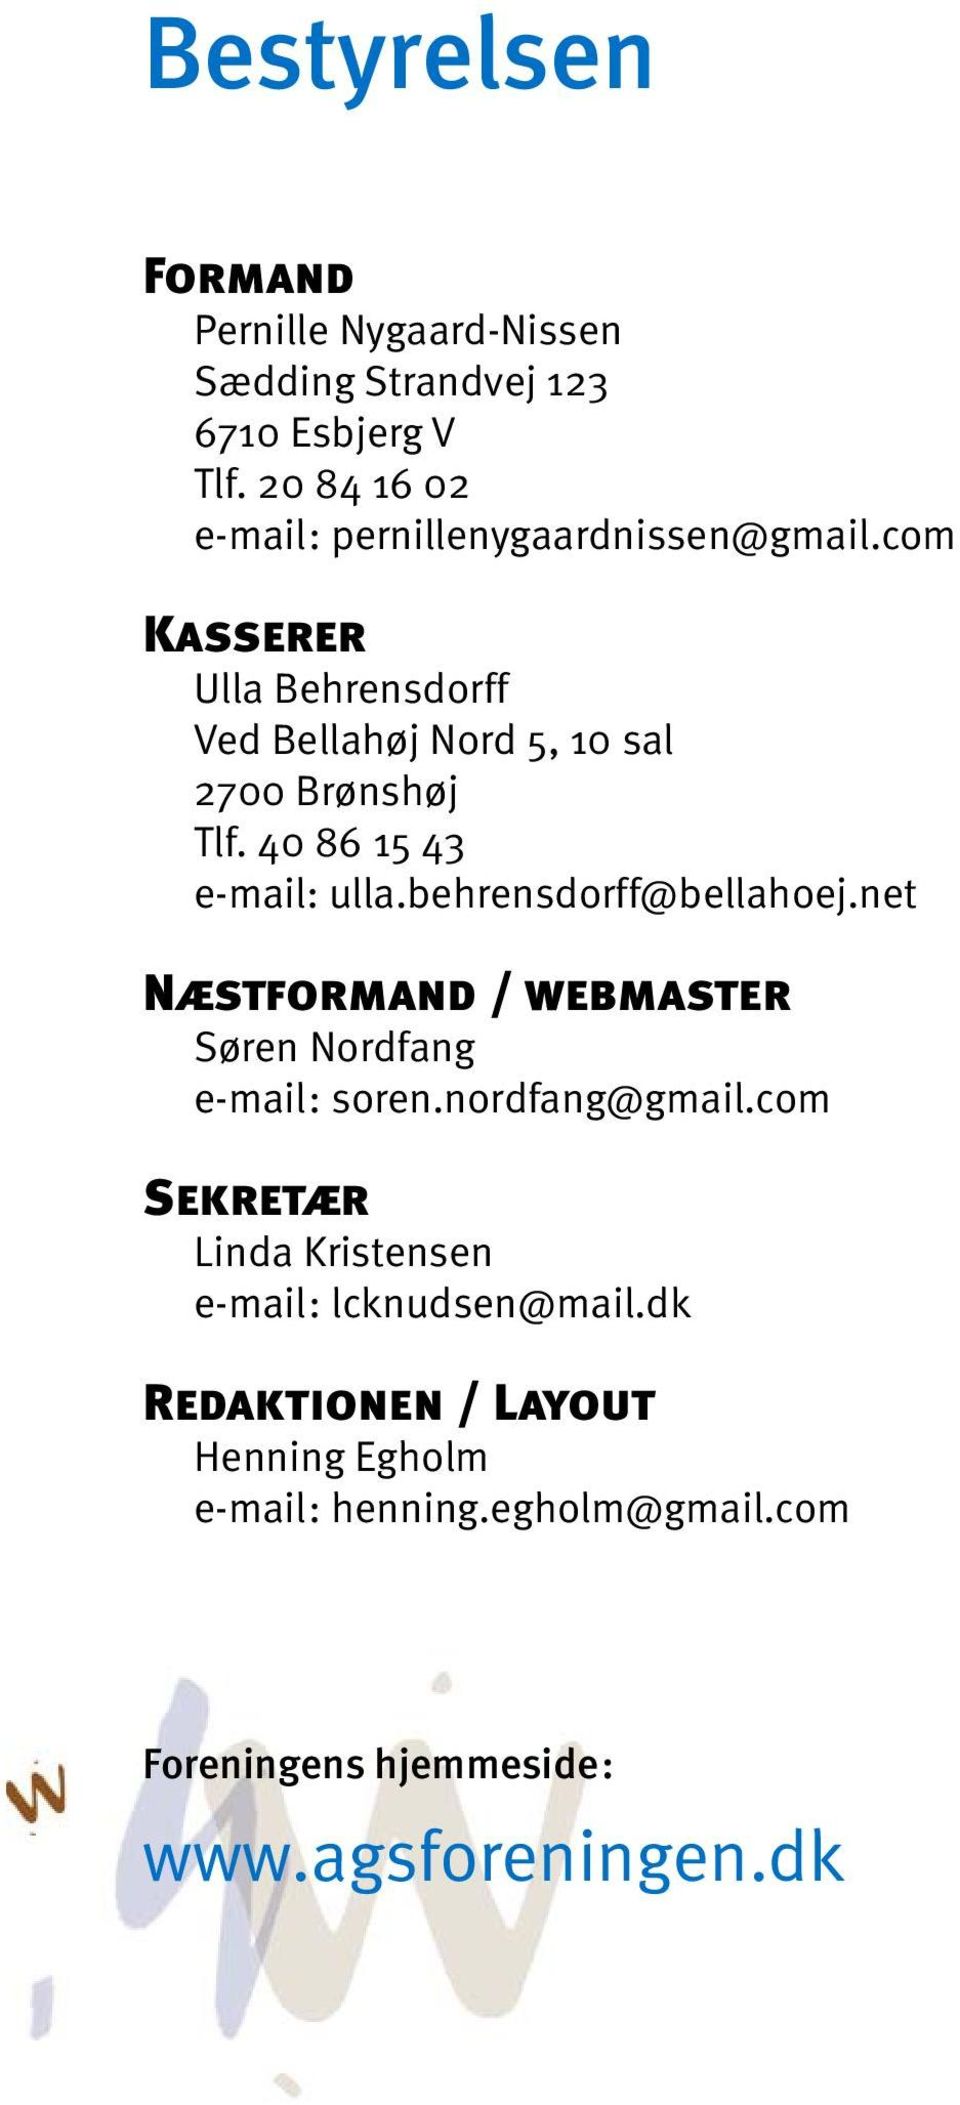 40 86 15 43 e-mail: ulla.behrensdorff@bellahoej.net Næstformand / webmaster Søren Nordfang e-mail: soren.nordfang@gmail.